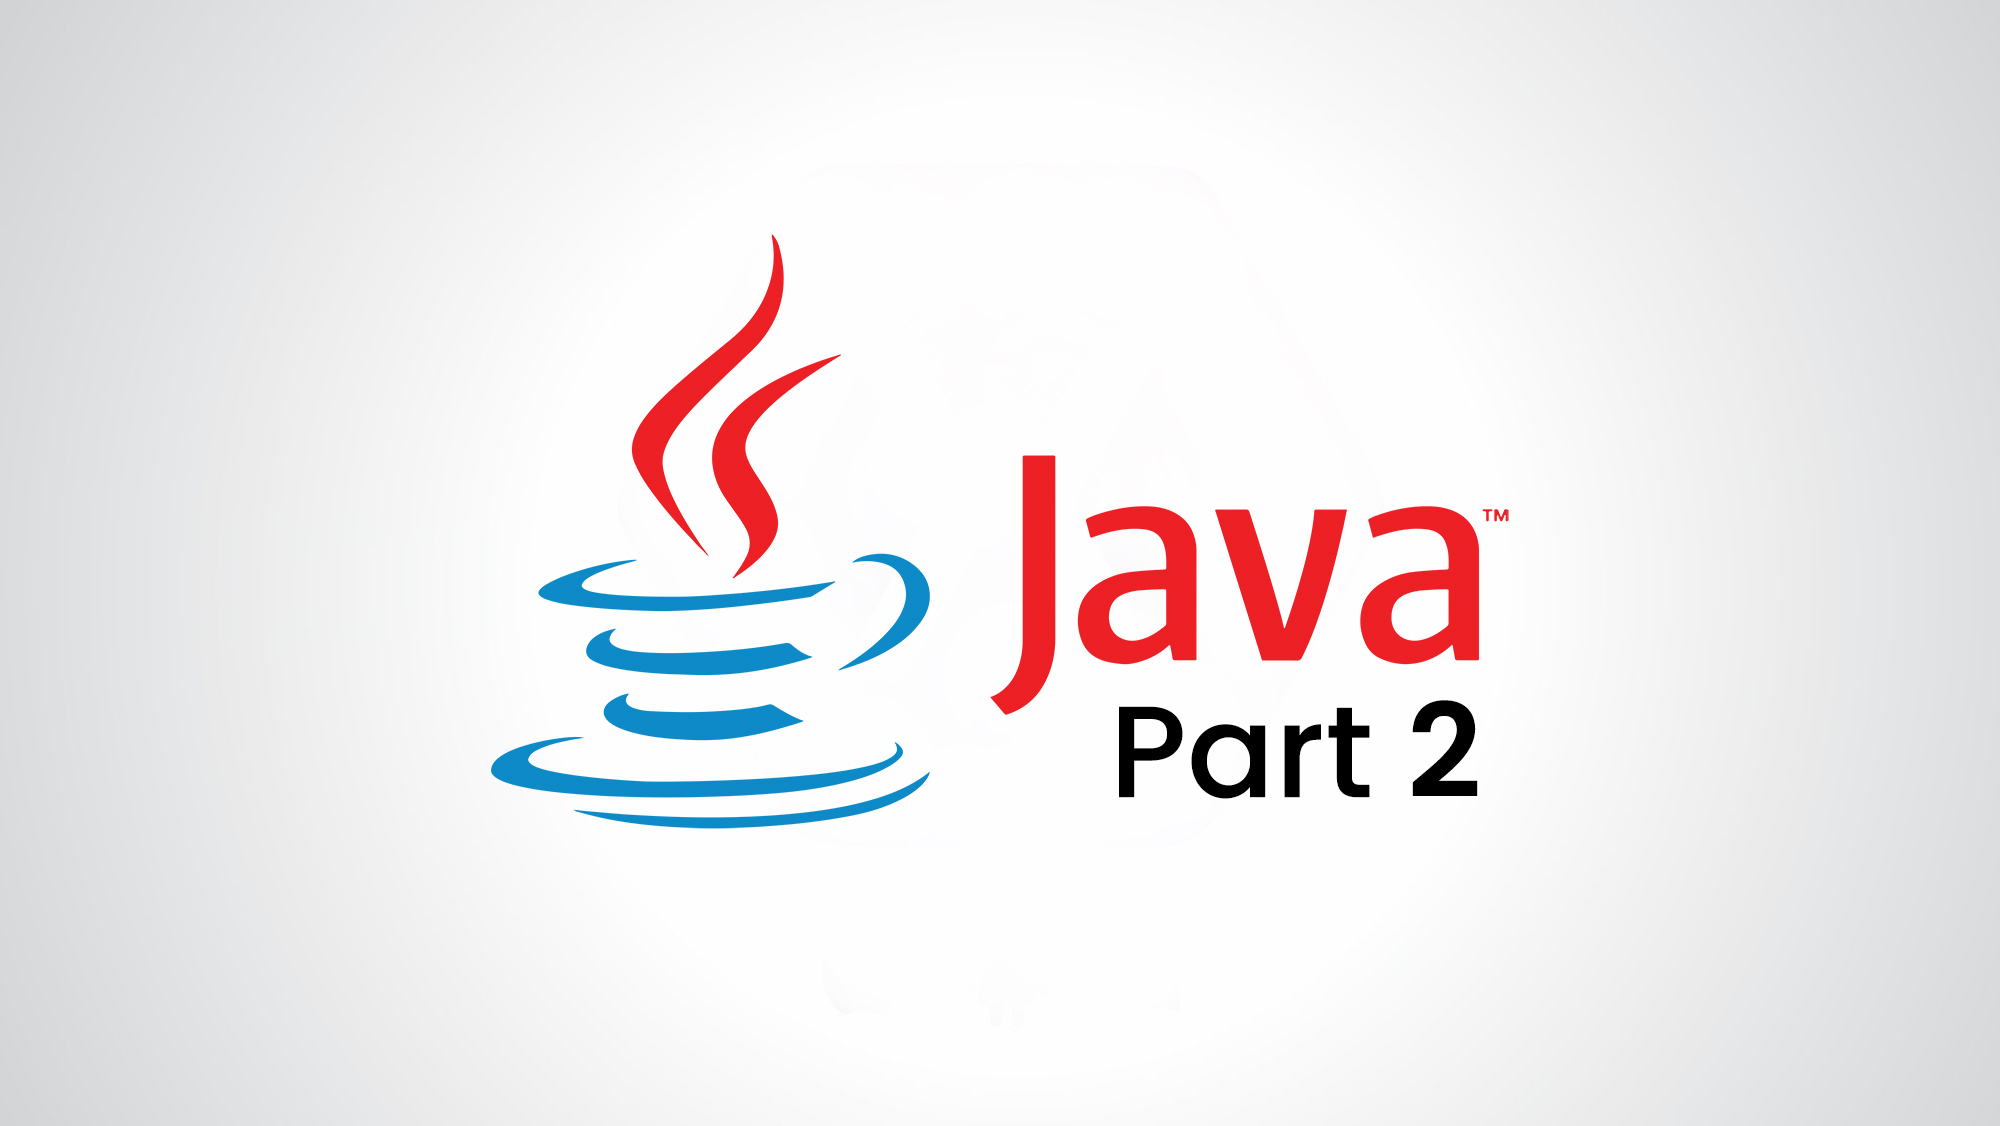 Mosh Hamedani - Ultimate Java Part 2: Object-oriented Programming